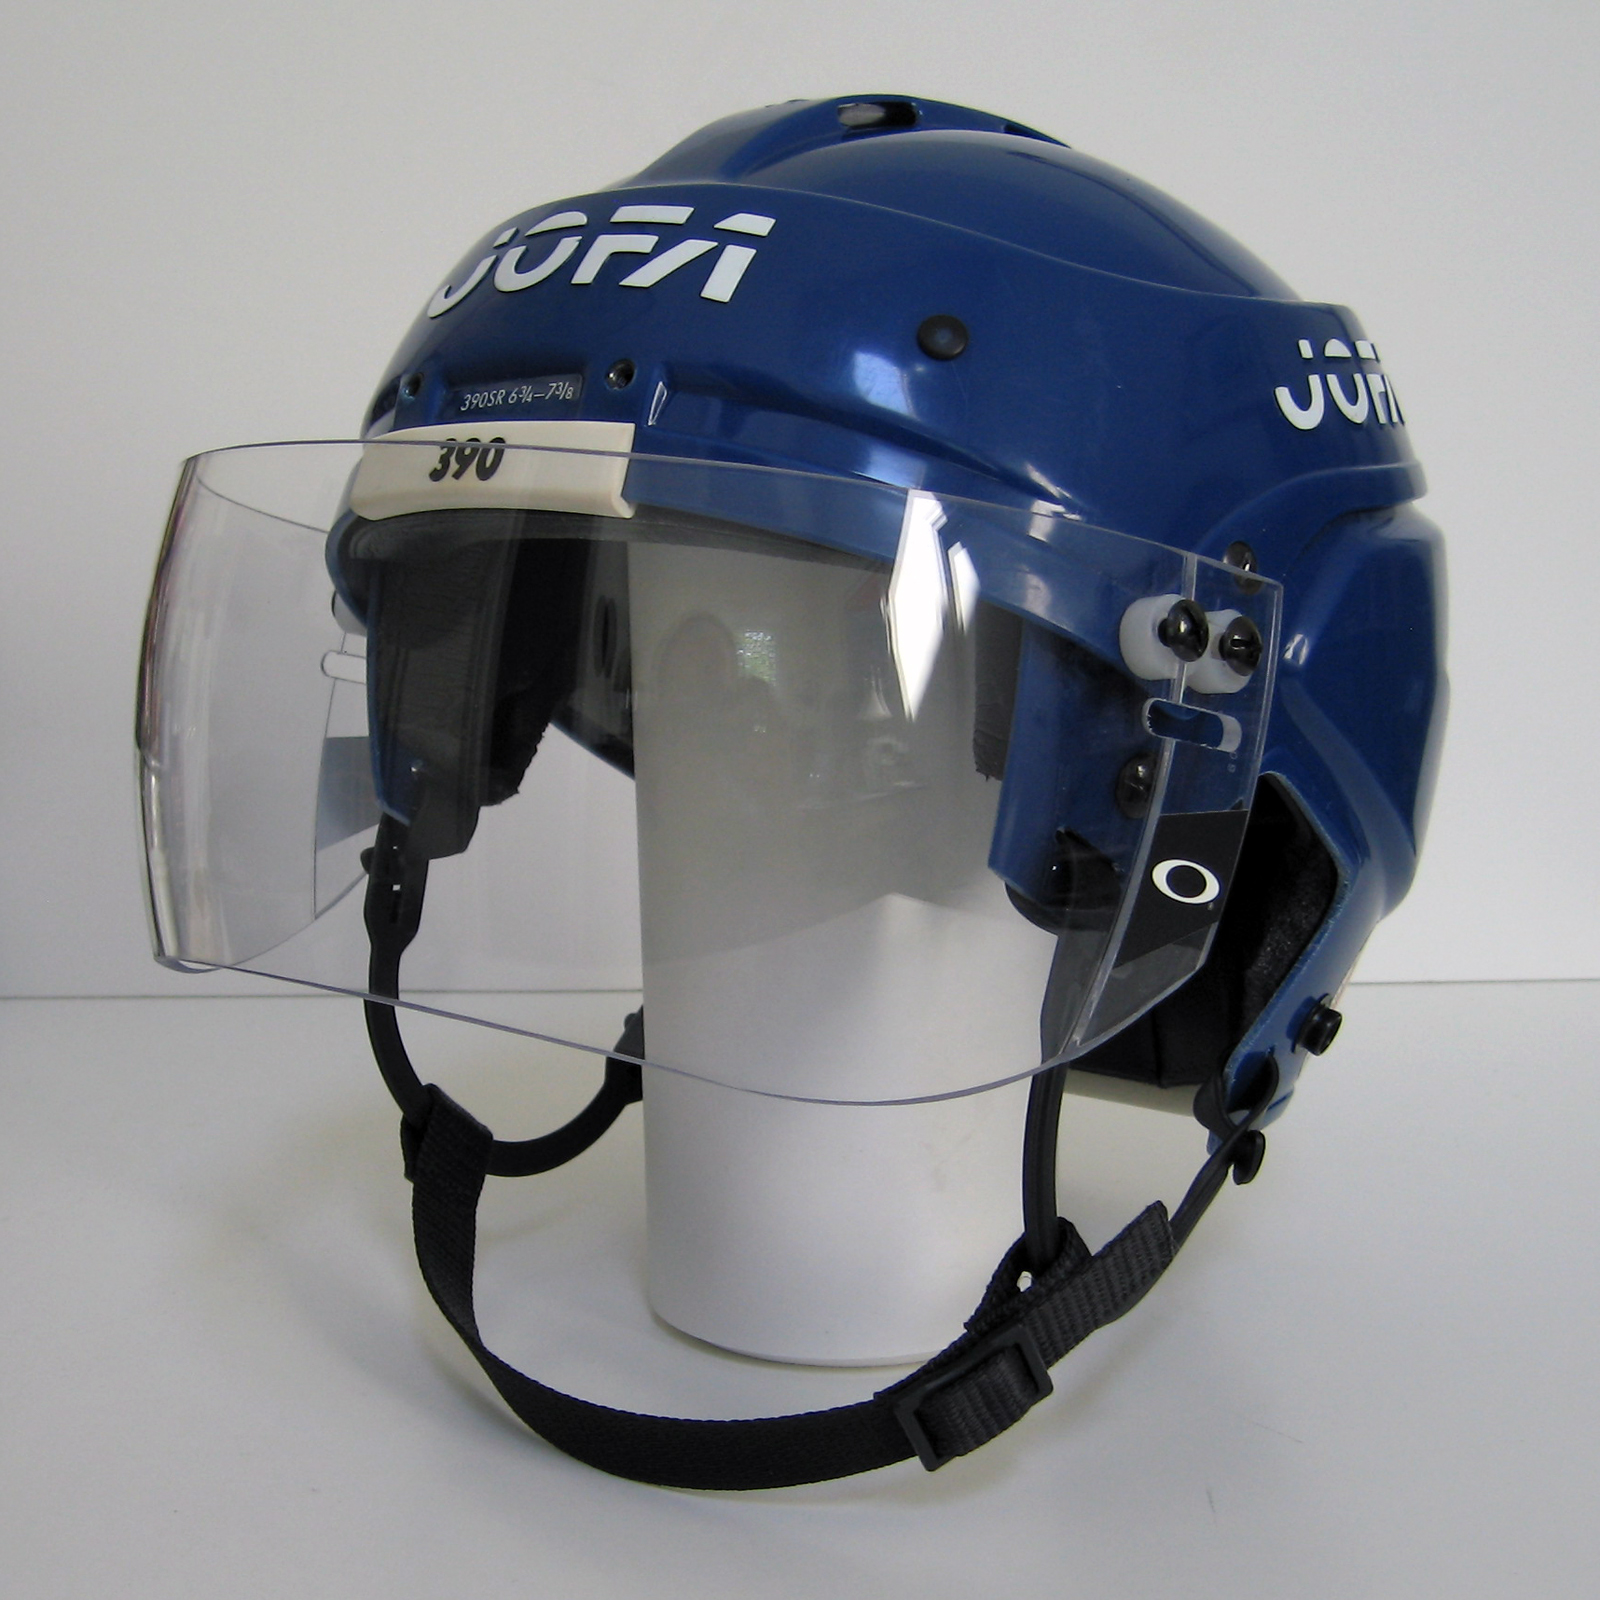  JOFA Helmets Halos Of Hockey Teemu Selanne Olympic JOFA Helmet 